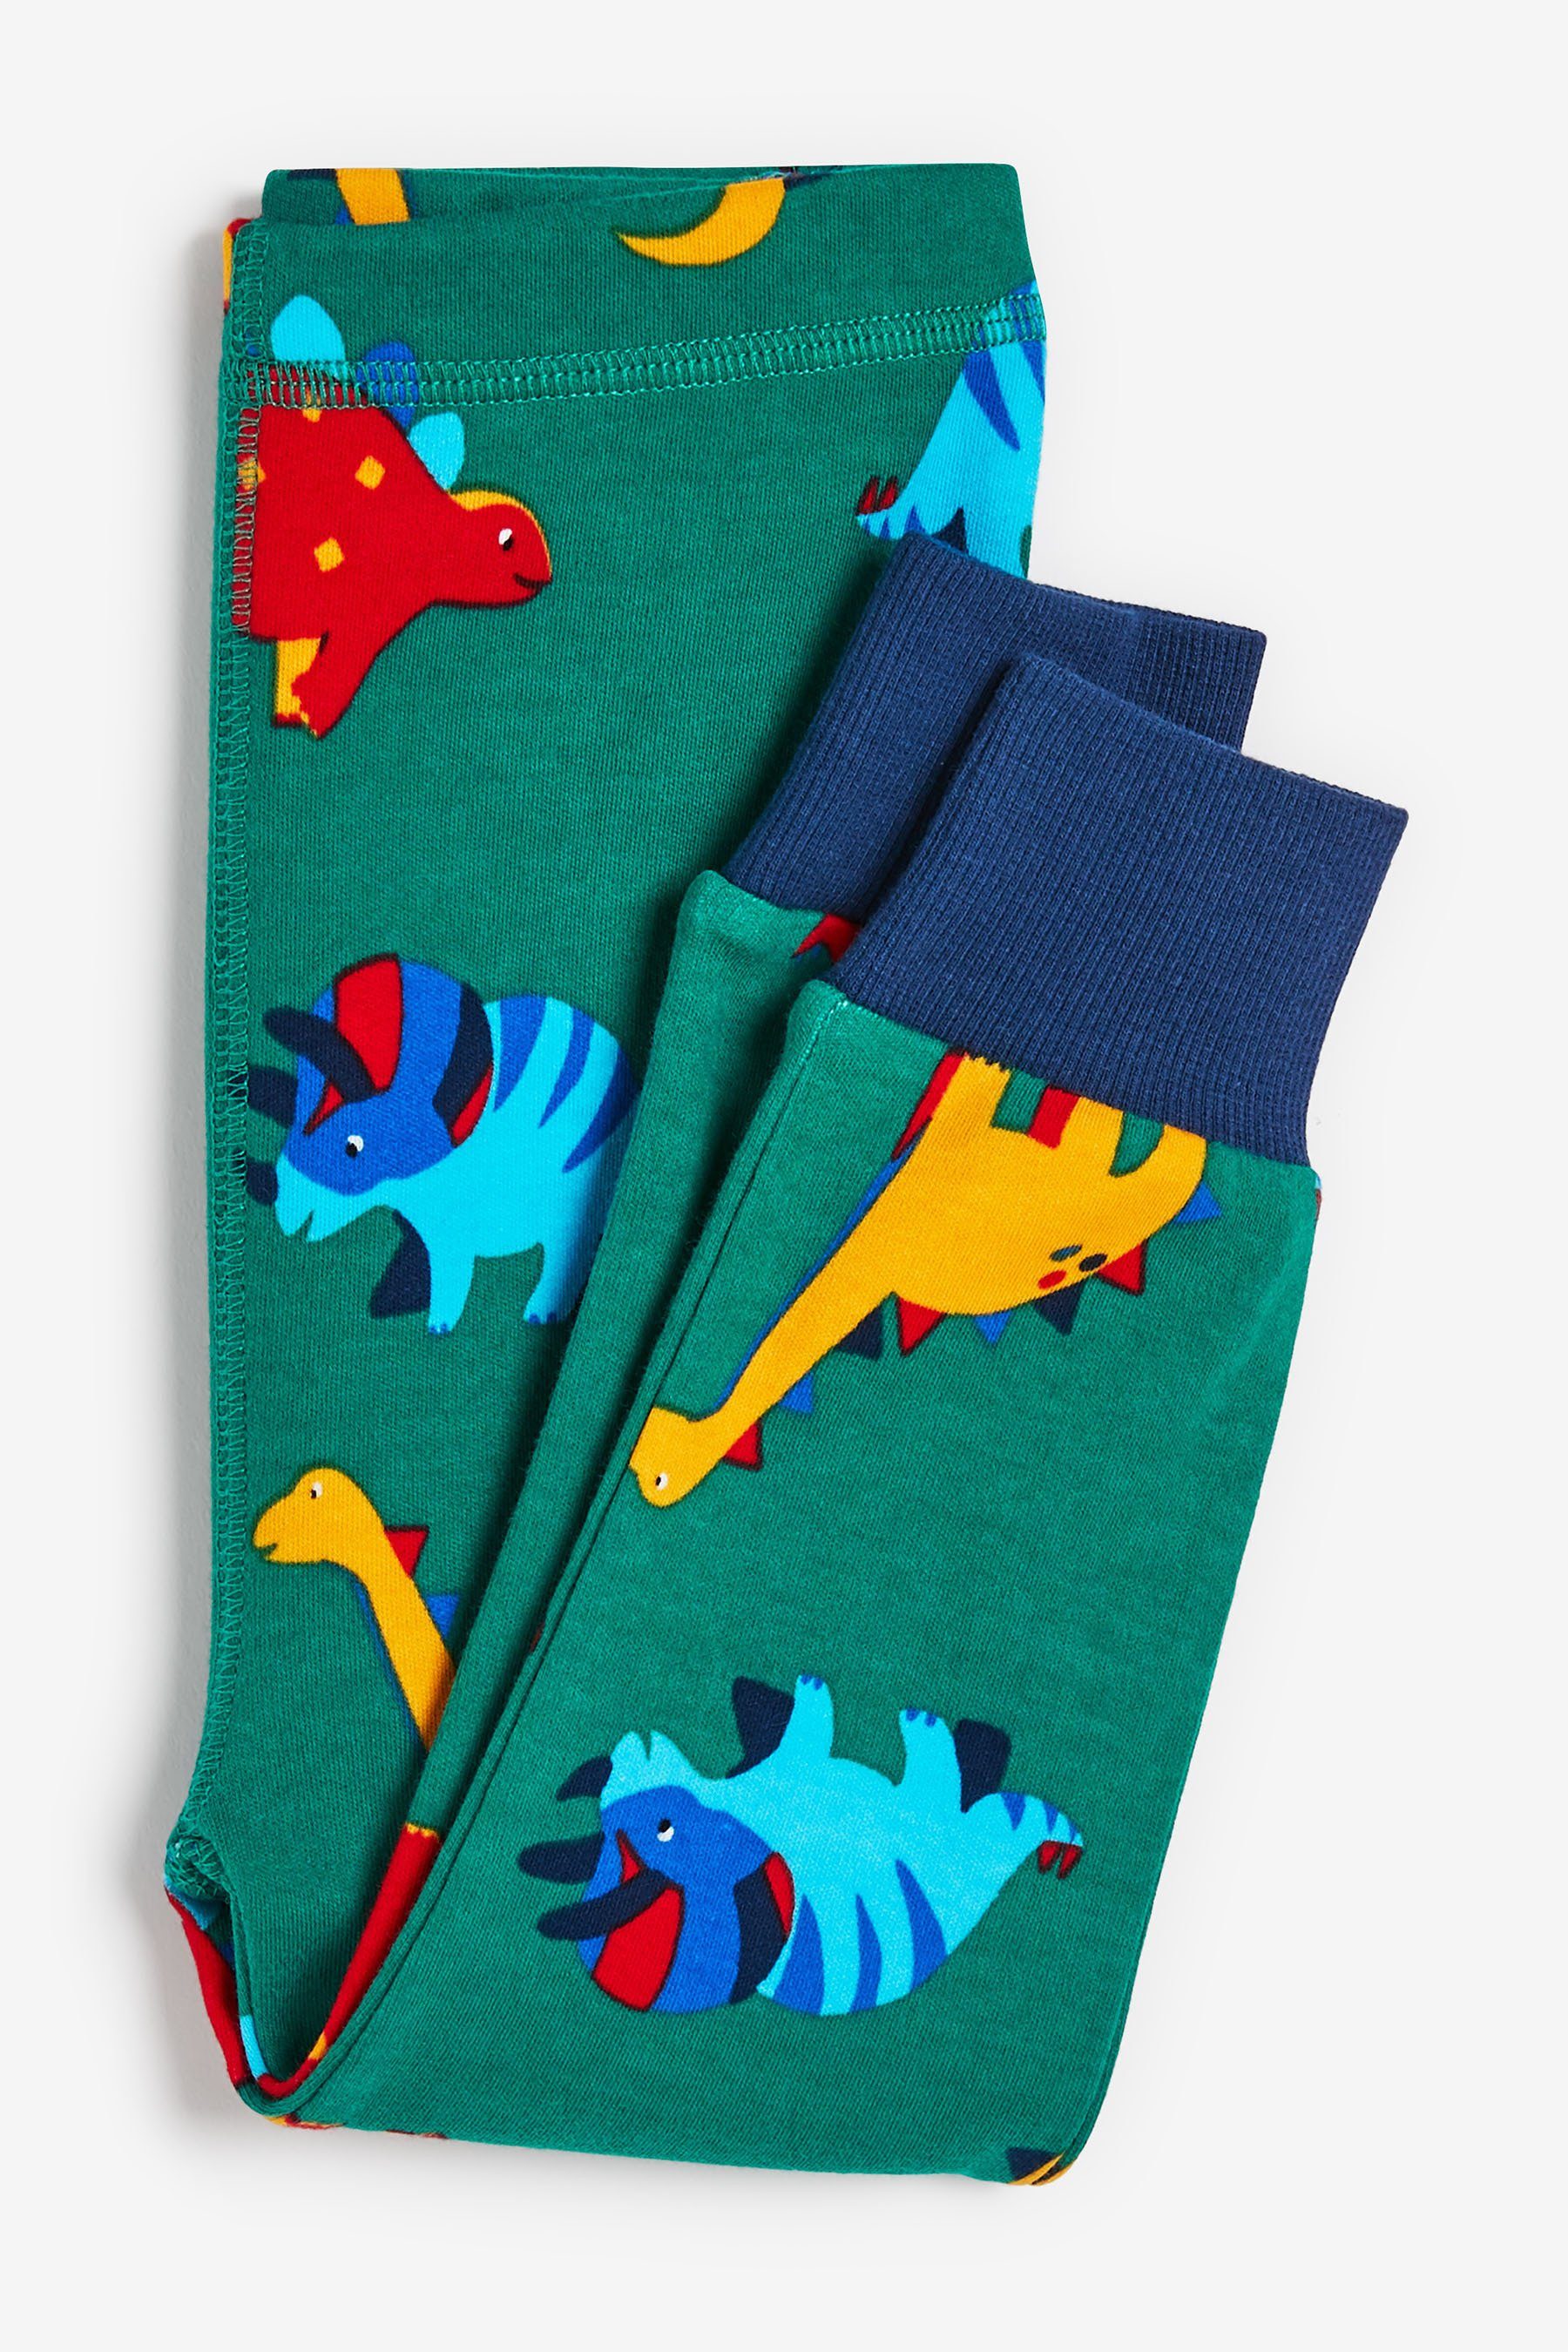 Next Pyjama Dino tlg) Stripe Kuschelpyjamas, 3er-Pack Blue/Red/Green (6